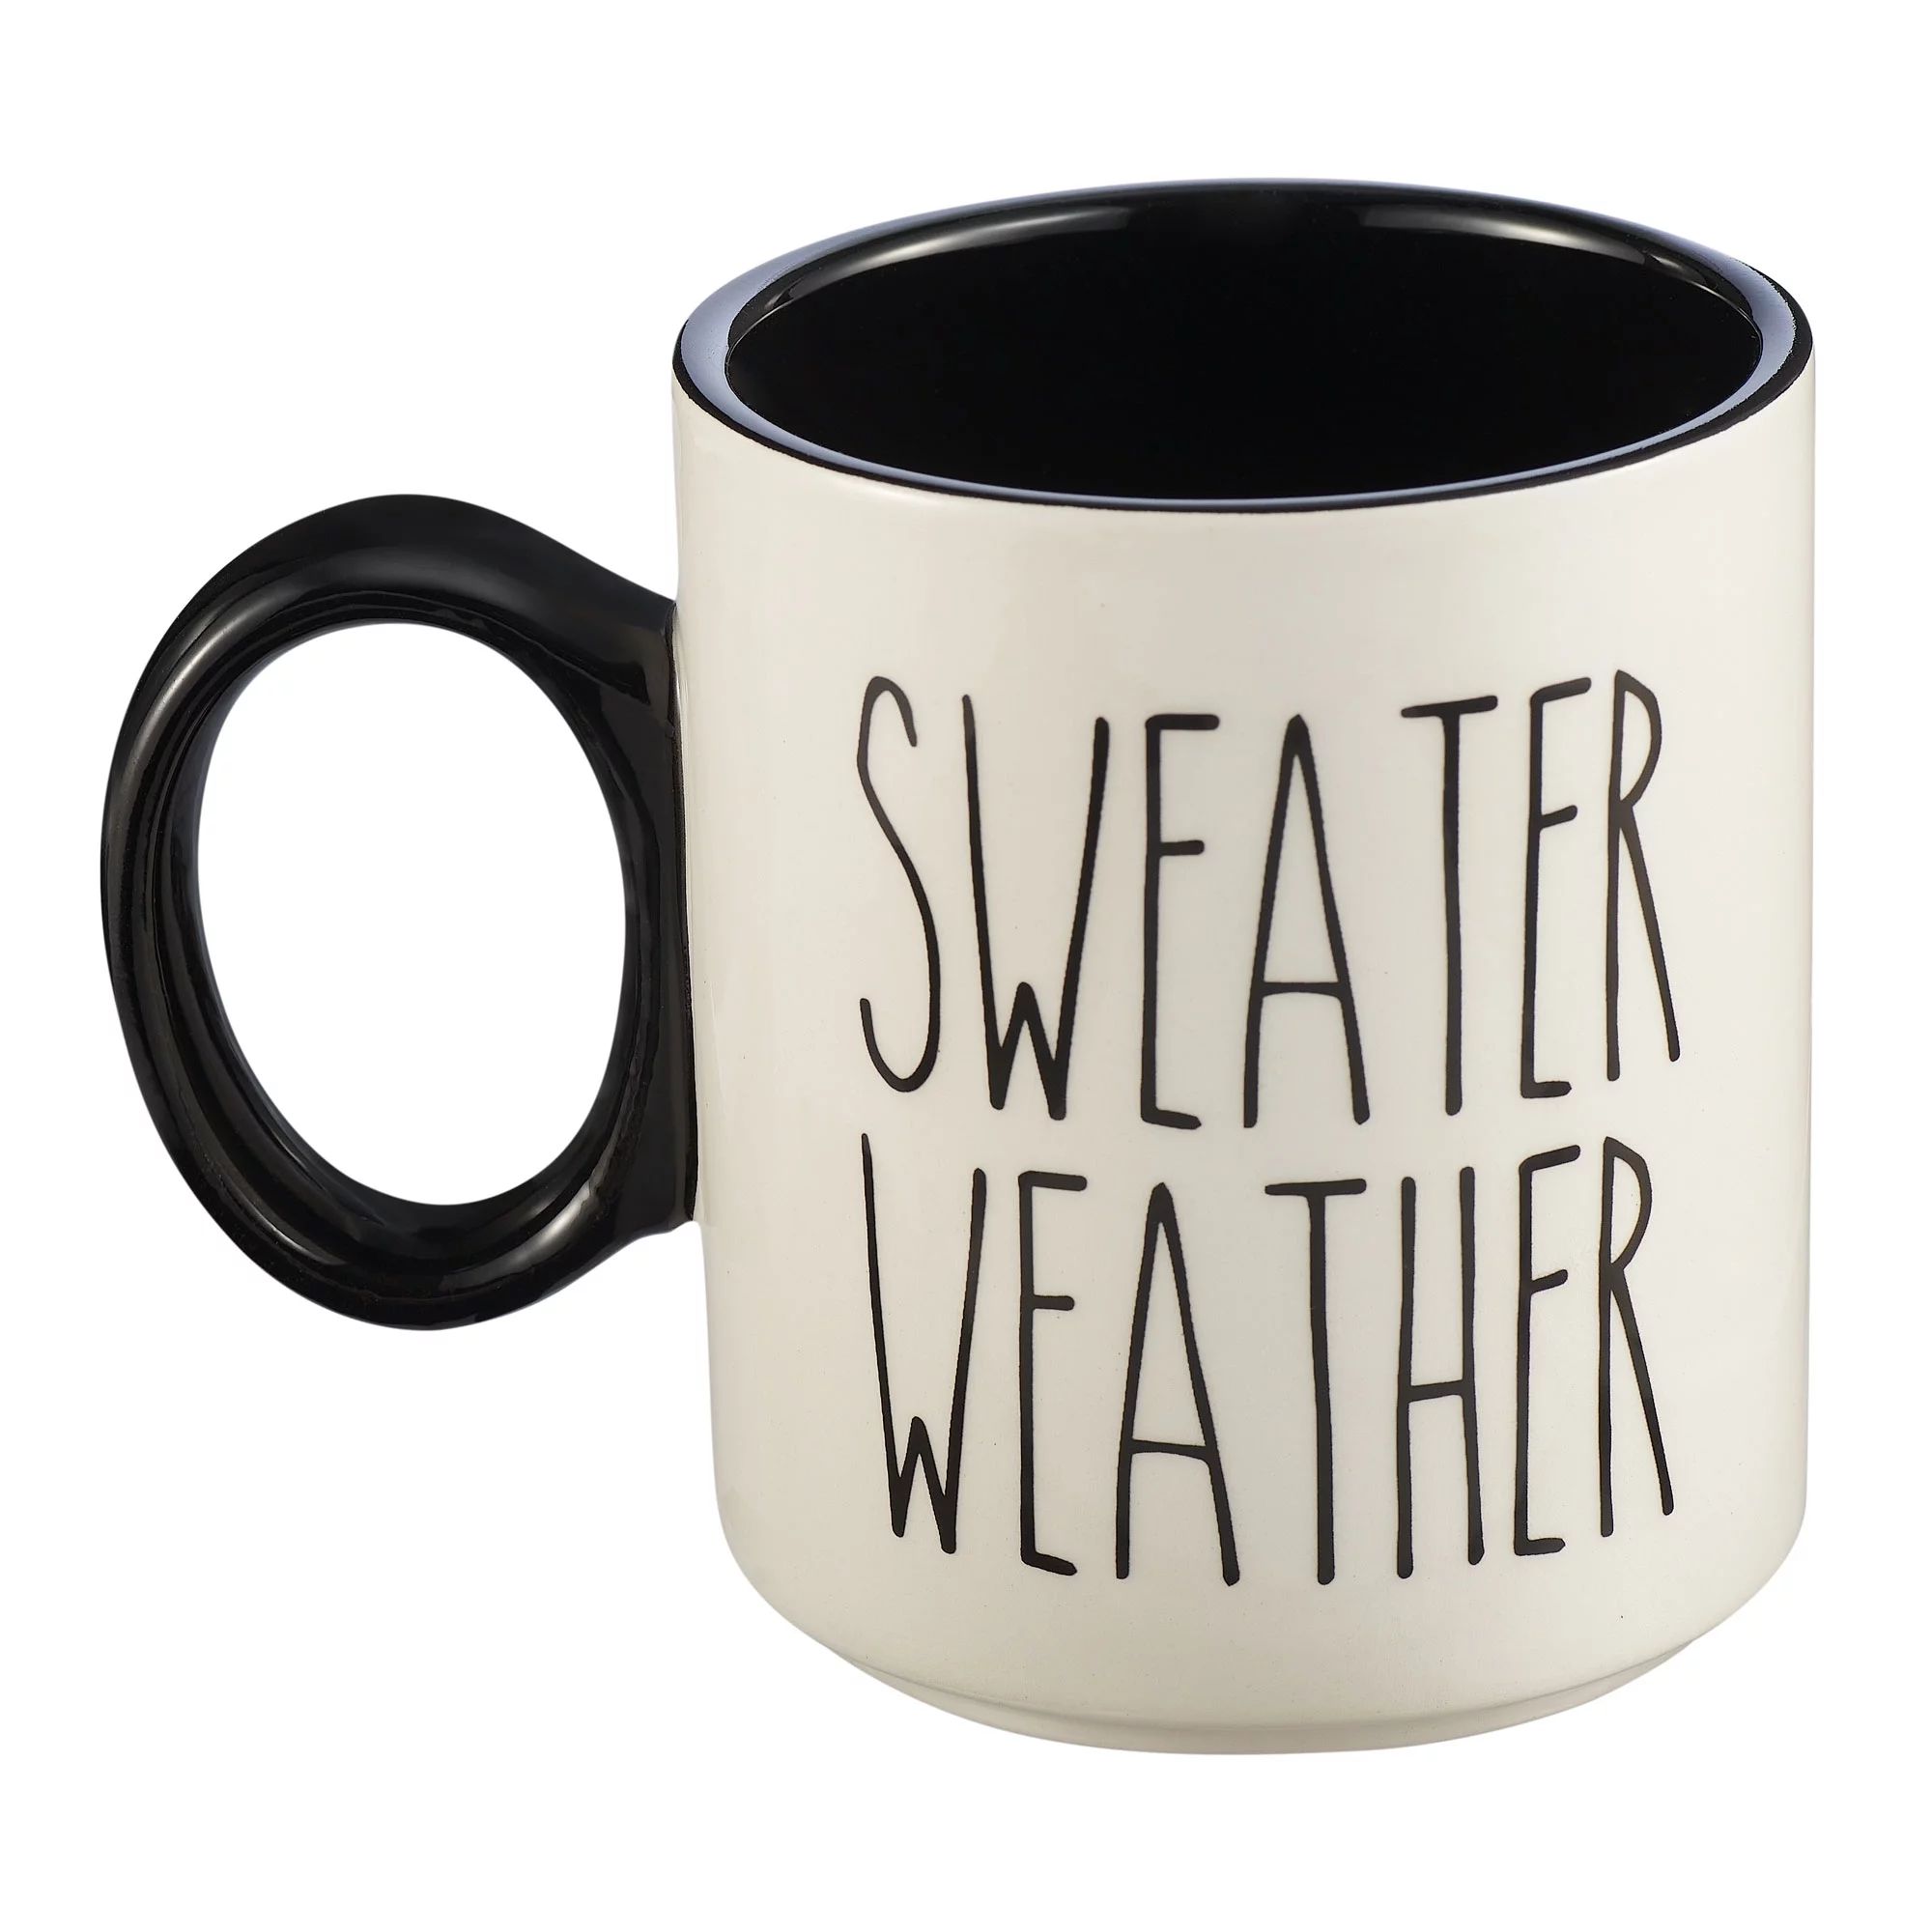 Way to Celebrate Sweater Weather Mug - Walmart.com | Walmart (US)